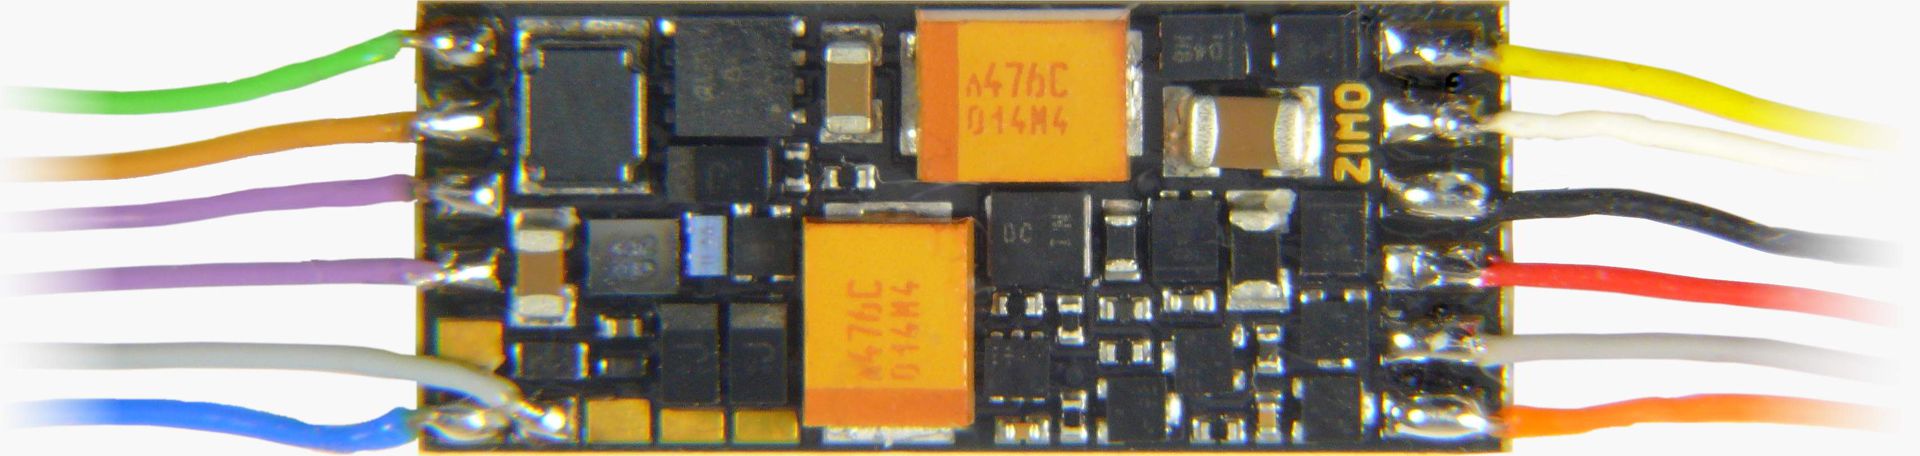 Zimo MS491 - Sounddecoder, 12 Anschlussdrähte, 19 x 7,8 x 2,8 mm, 0,7 A